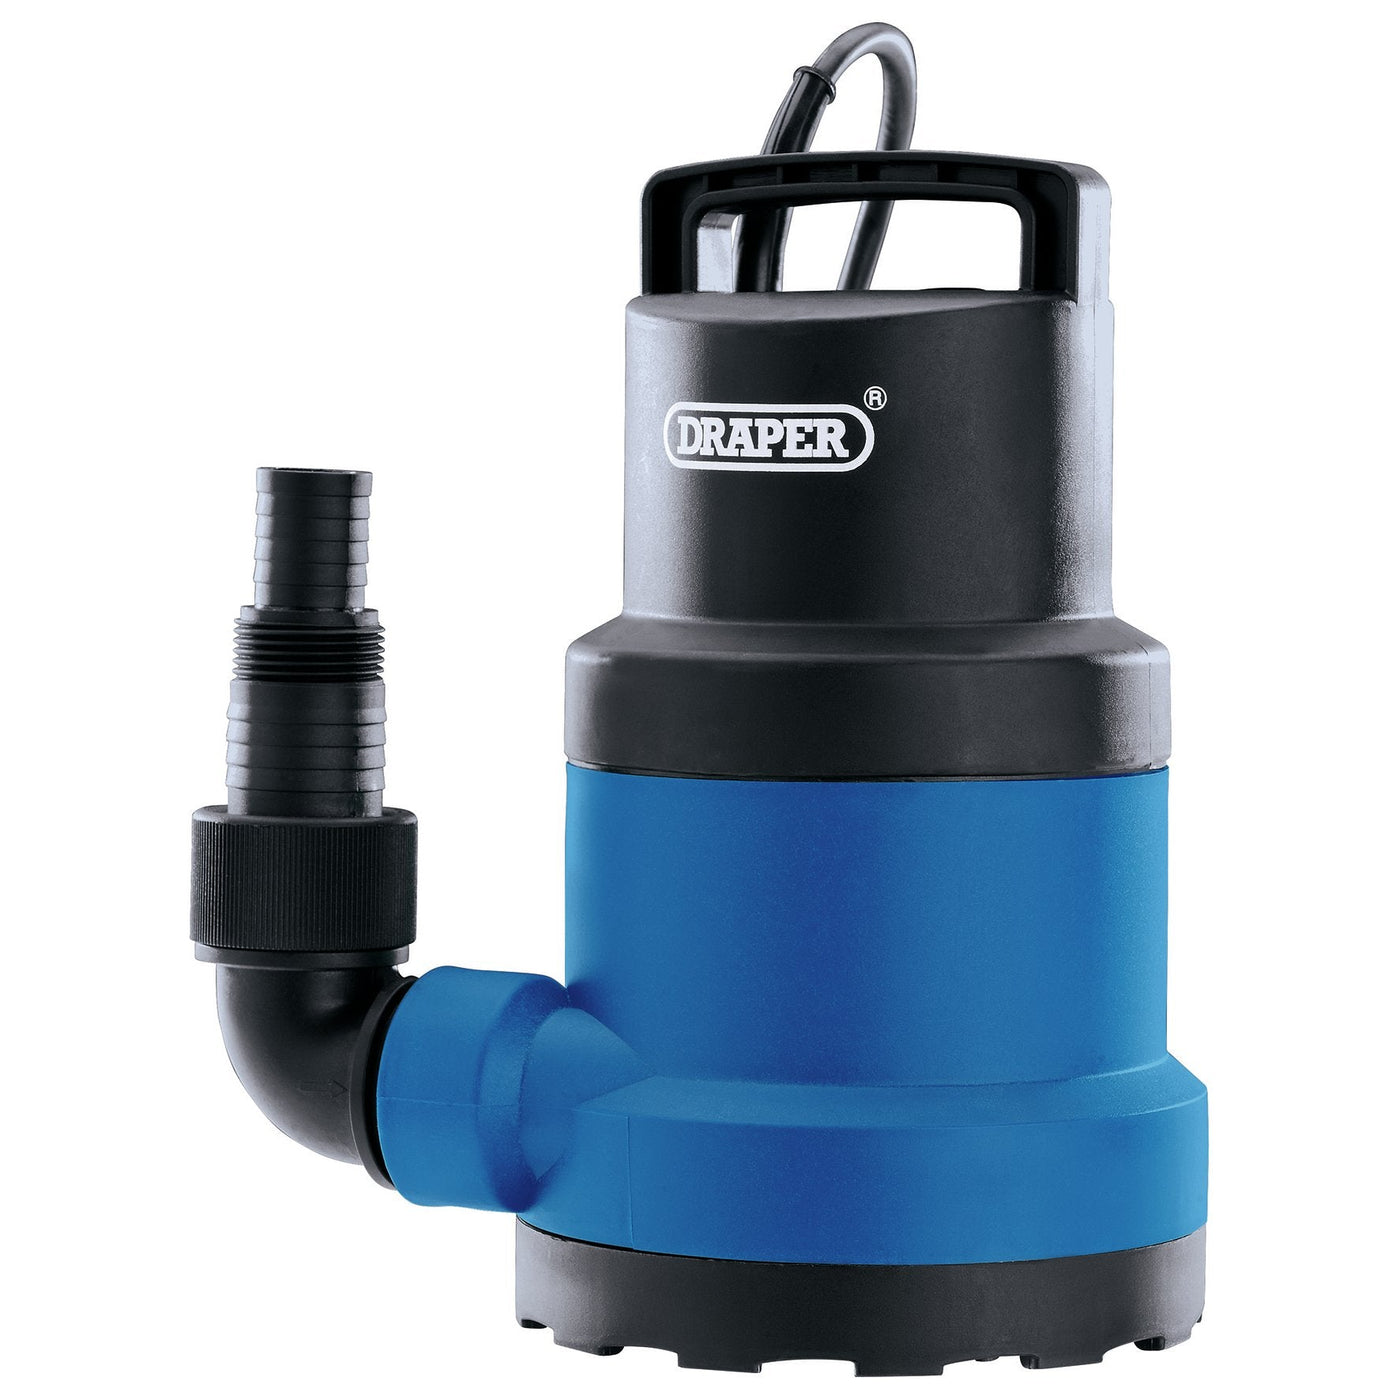 Draper 98911 Submersible Water Pump (250W)